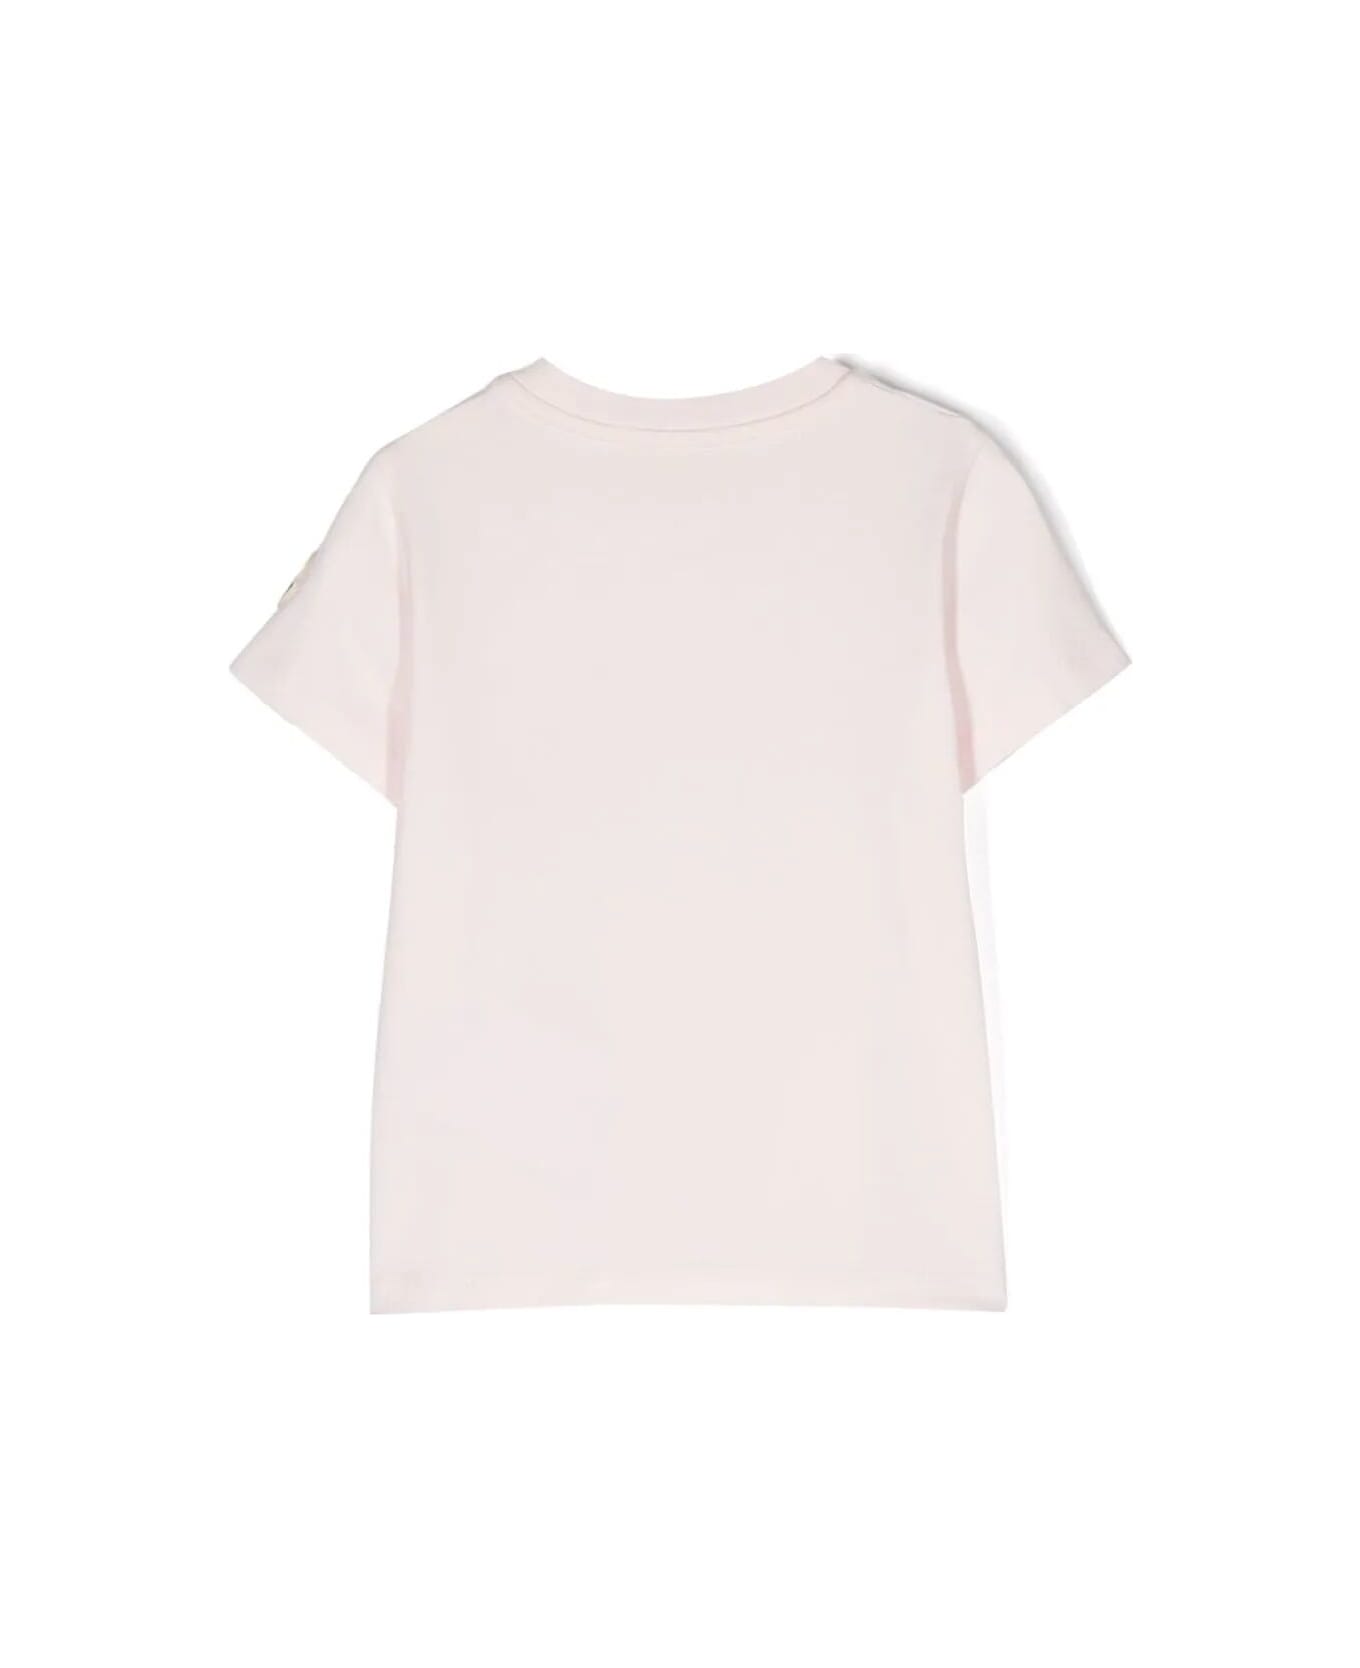 Moncler Ss T-shirt - Pink